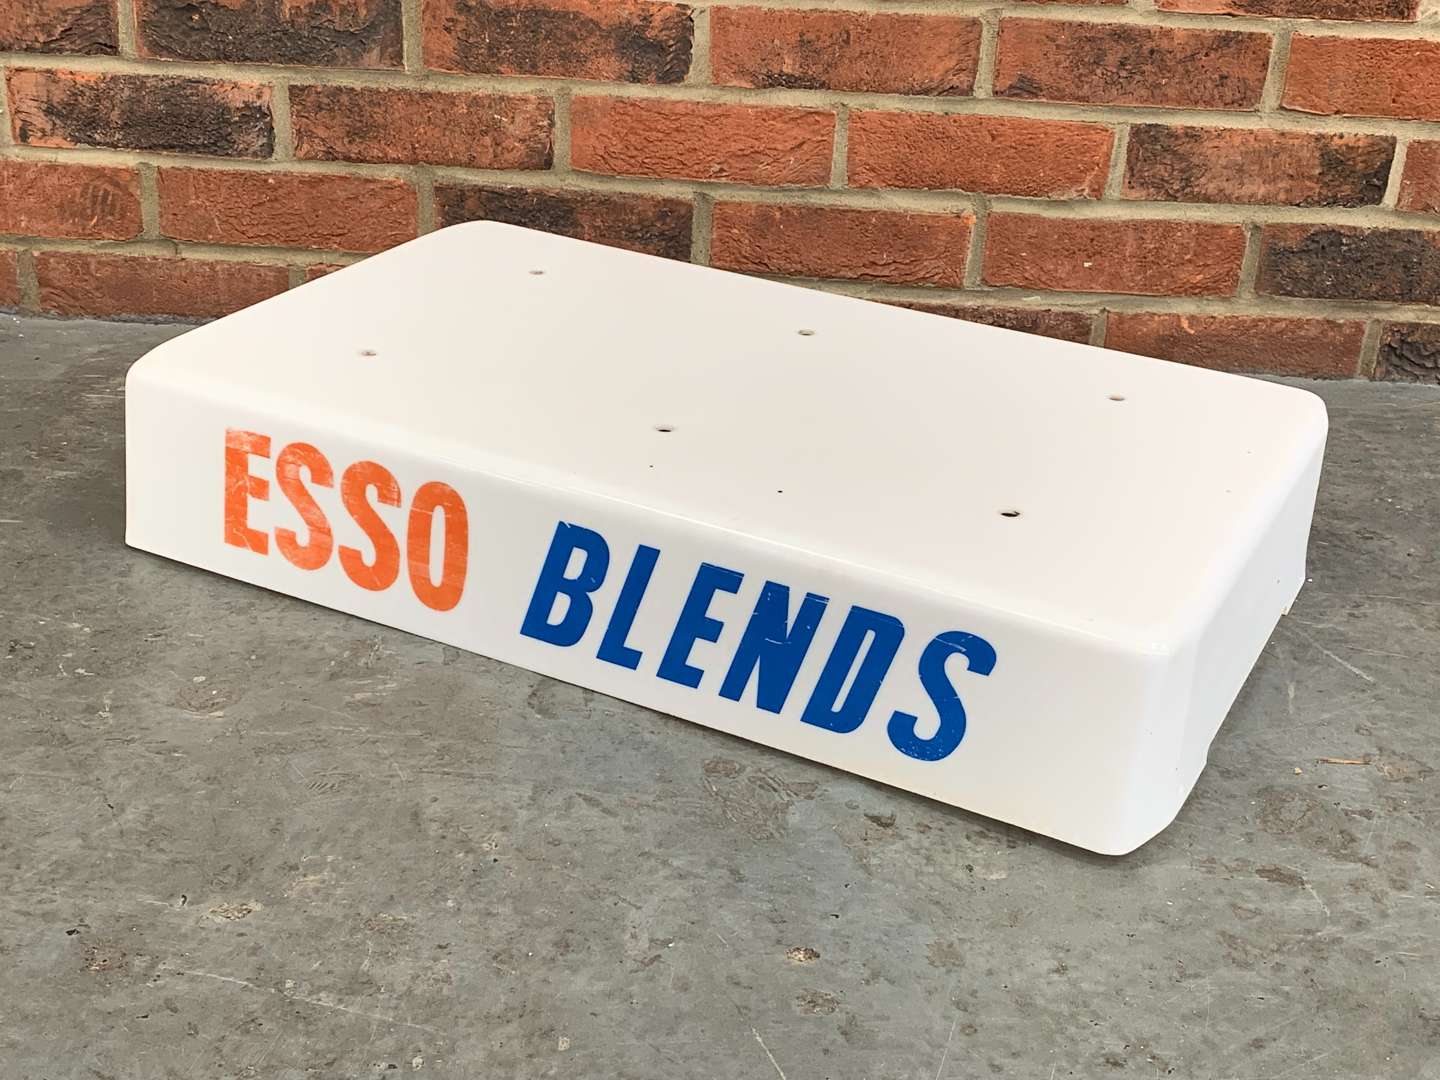 <p>Esso Blends Plastic Petrol Pump Top</p>